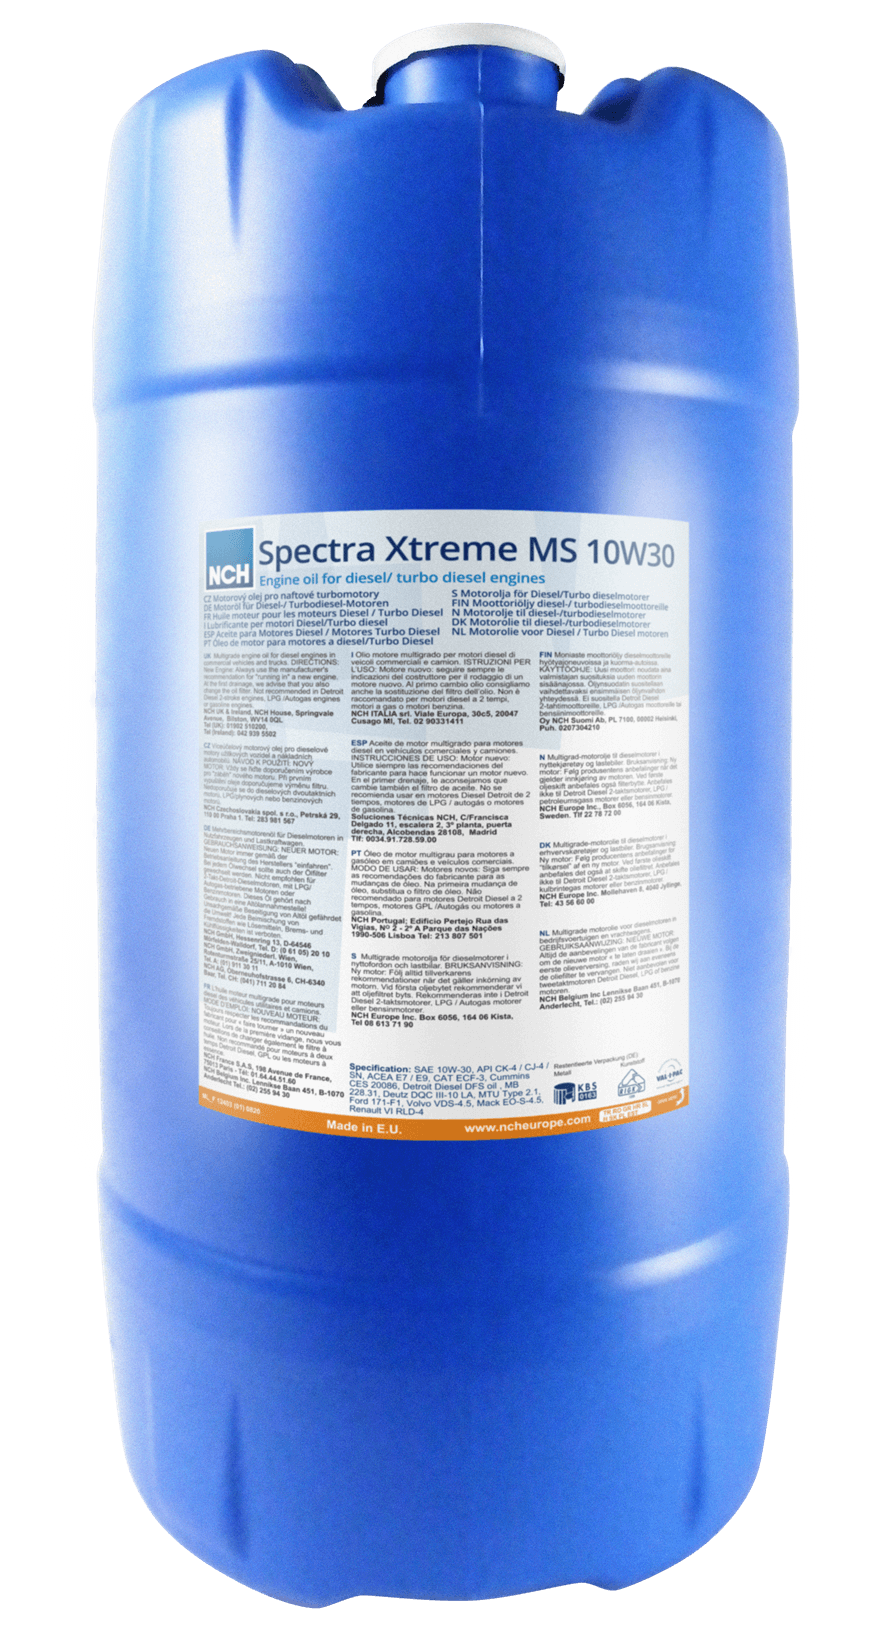 Spectra Xtreme MS